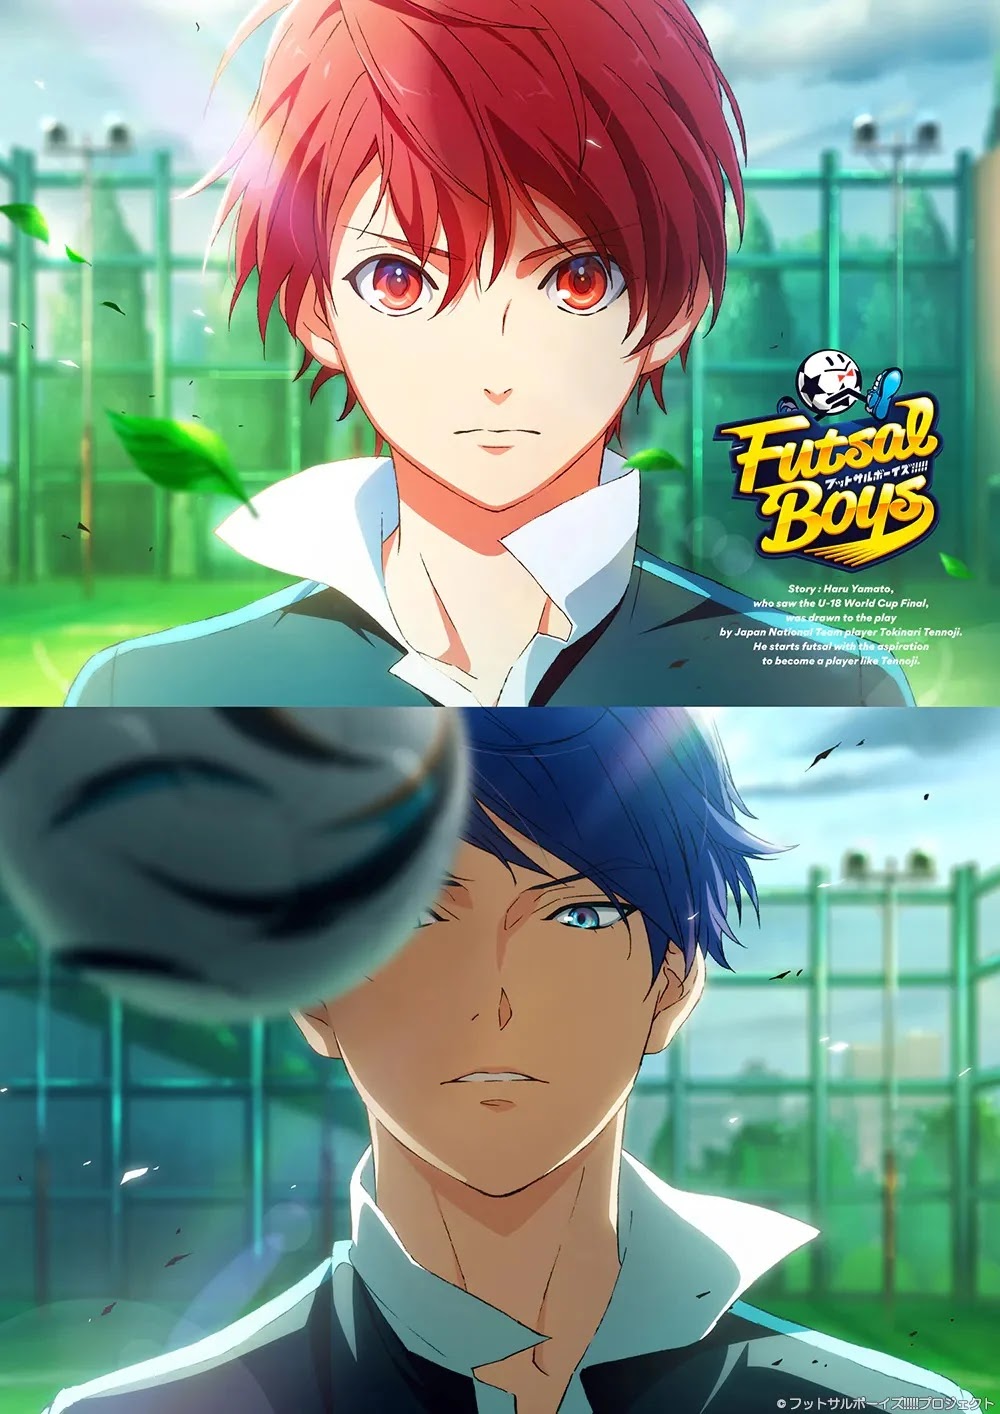 O Anime Original Futsal Boys!!!!! revelou seu primeiro Vídeo Promocional